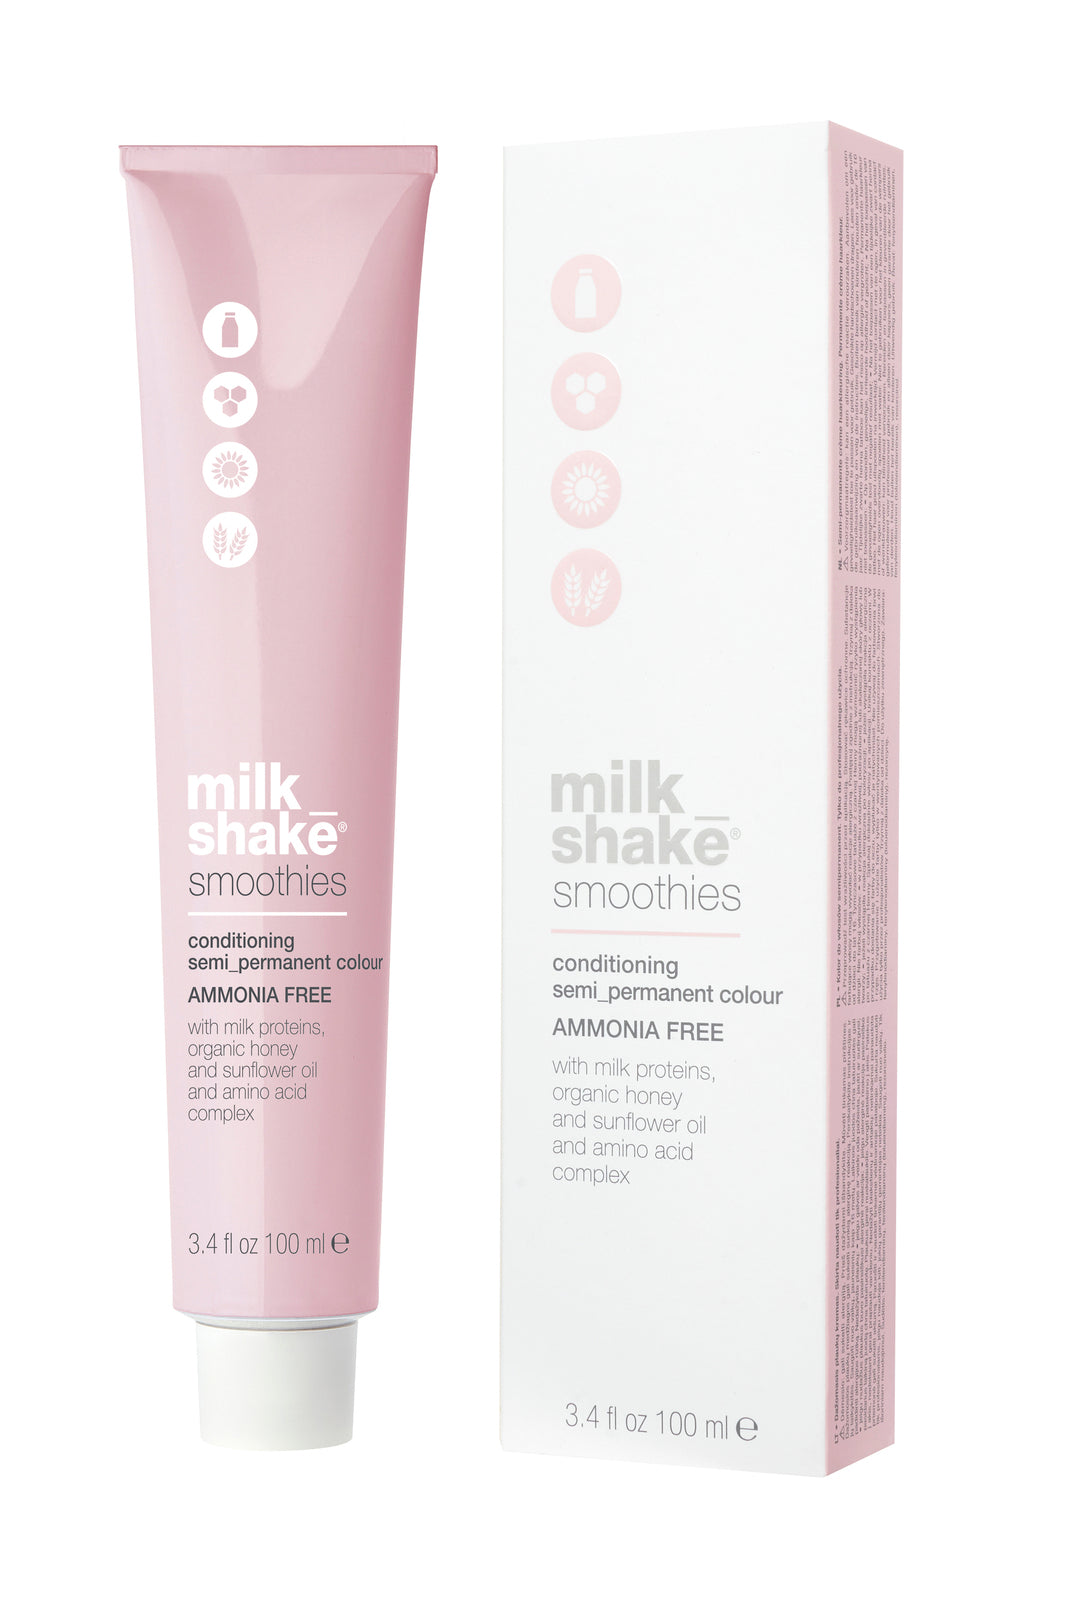 Milkshake smoothies semi-permanent color 7.33